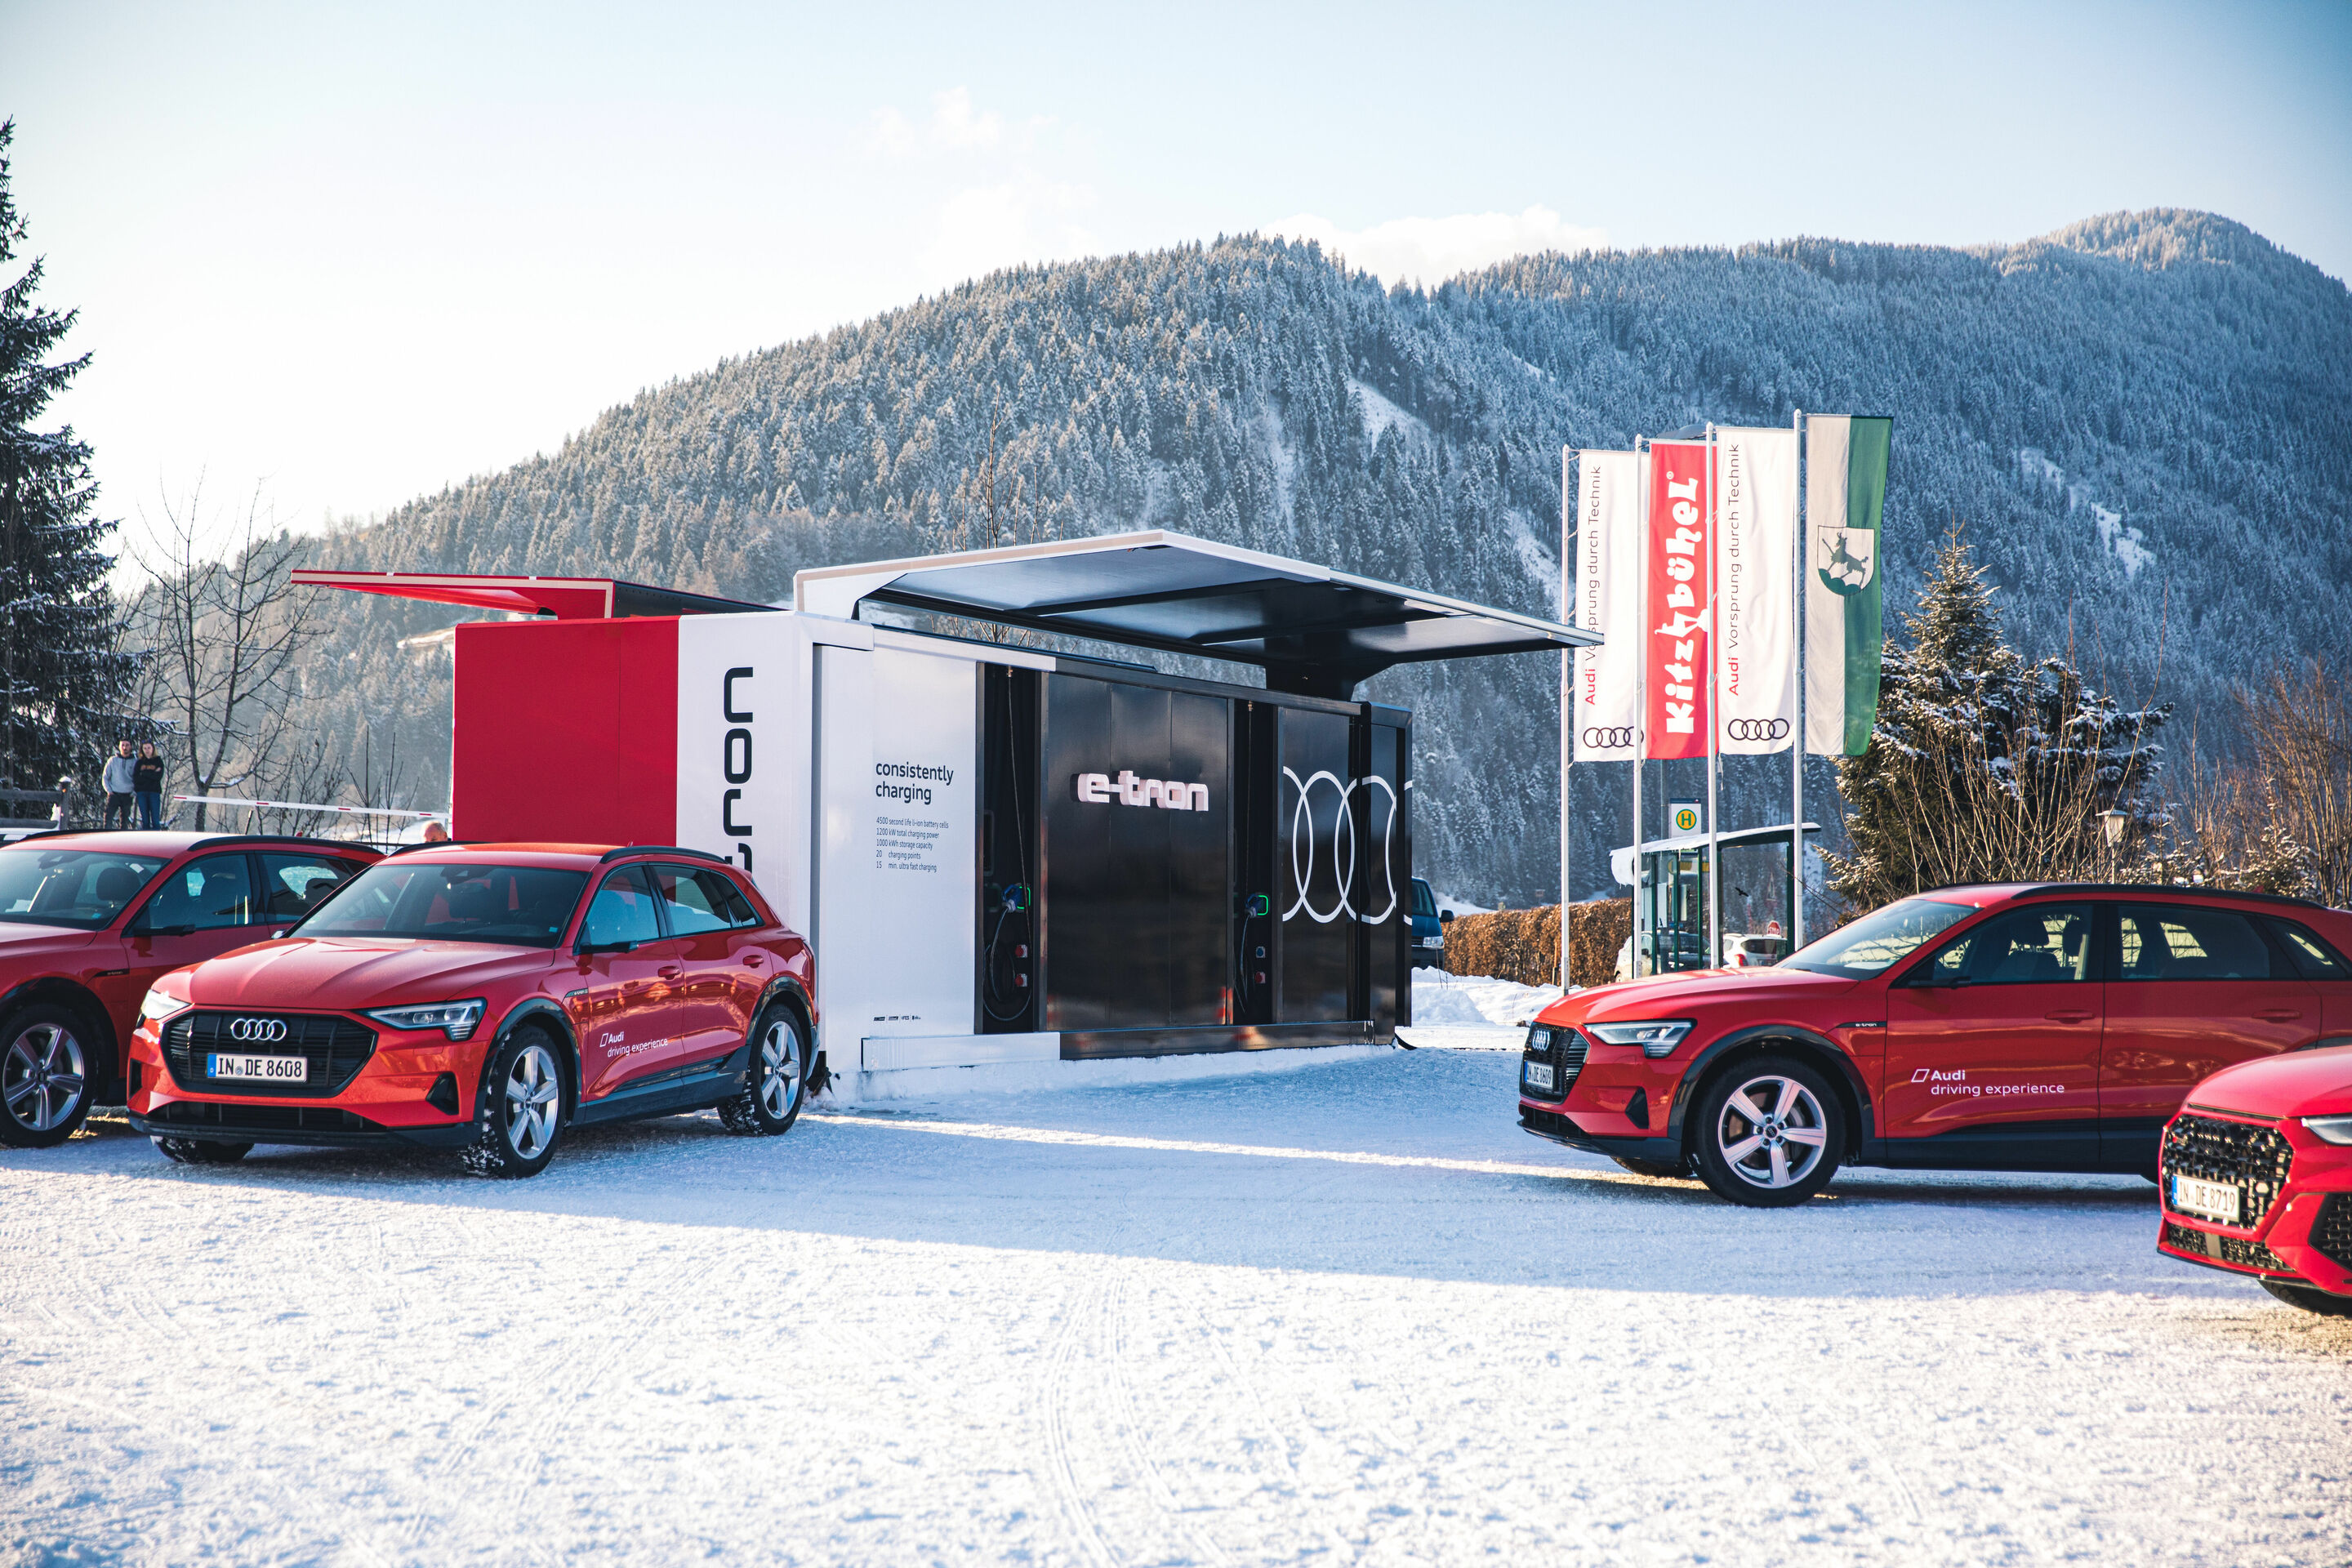 Audi at the World Economic Forum in Davos 20